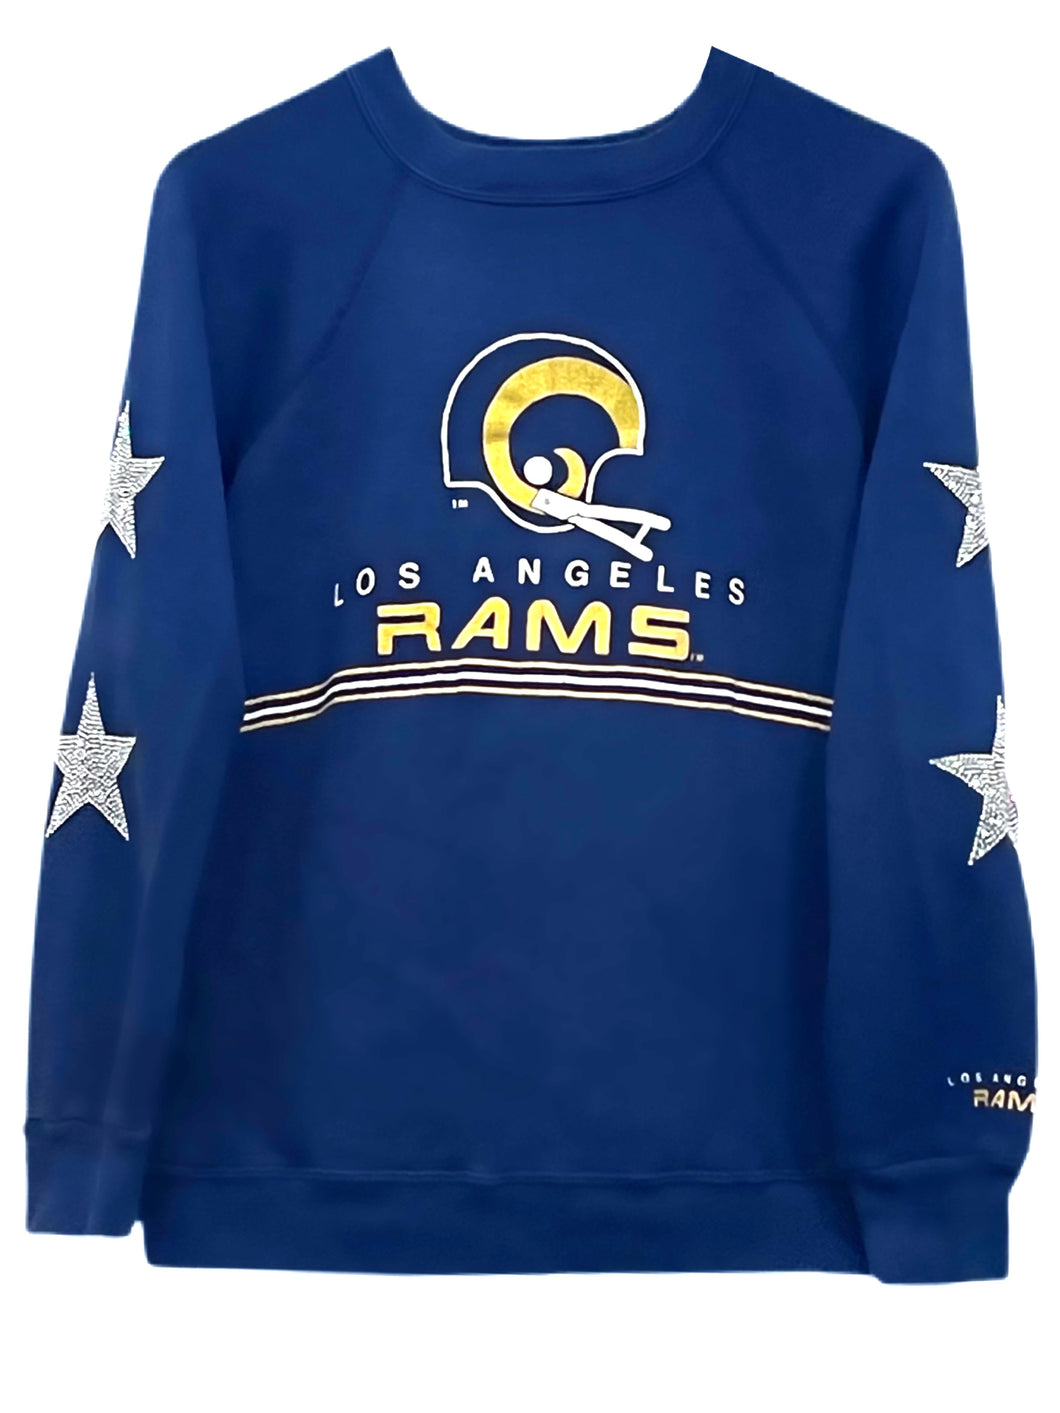 Los Angeles Rams, NFL One of a KIND Vintage LA Rams Sweatshirt with Crystal Star Design